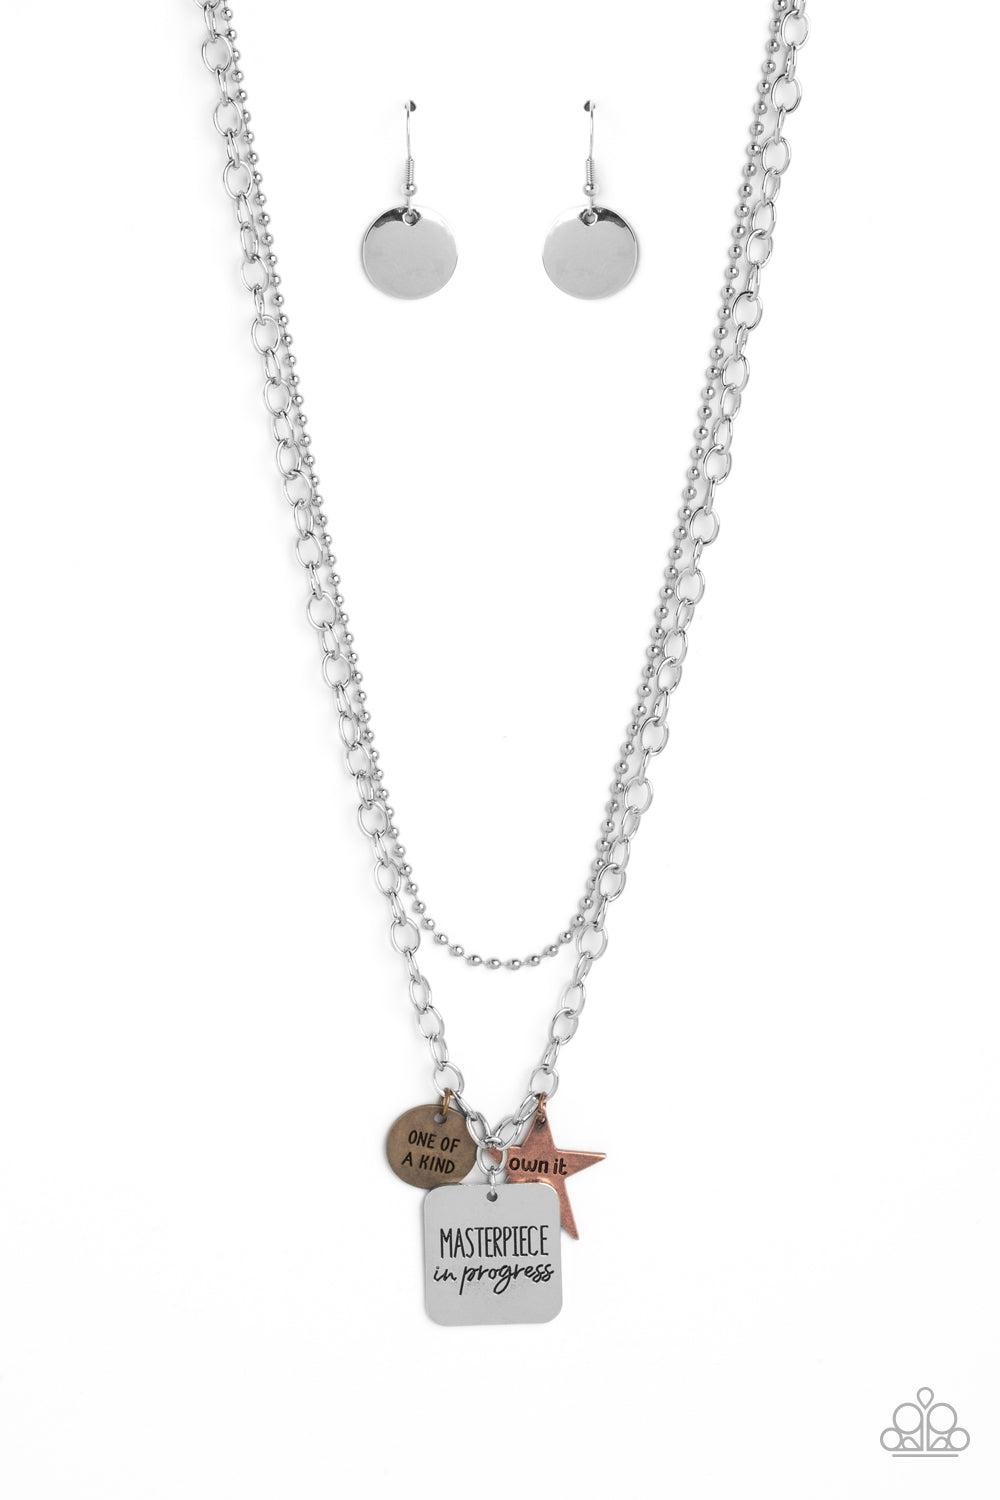 Masterpiece in Progress Multi Inspirational Necklace - Paparazzi Accessories- lightbox - CarasShop.com - $5 Jewelry by Cara Jewels